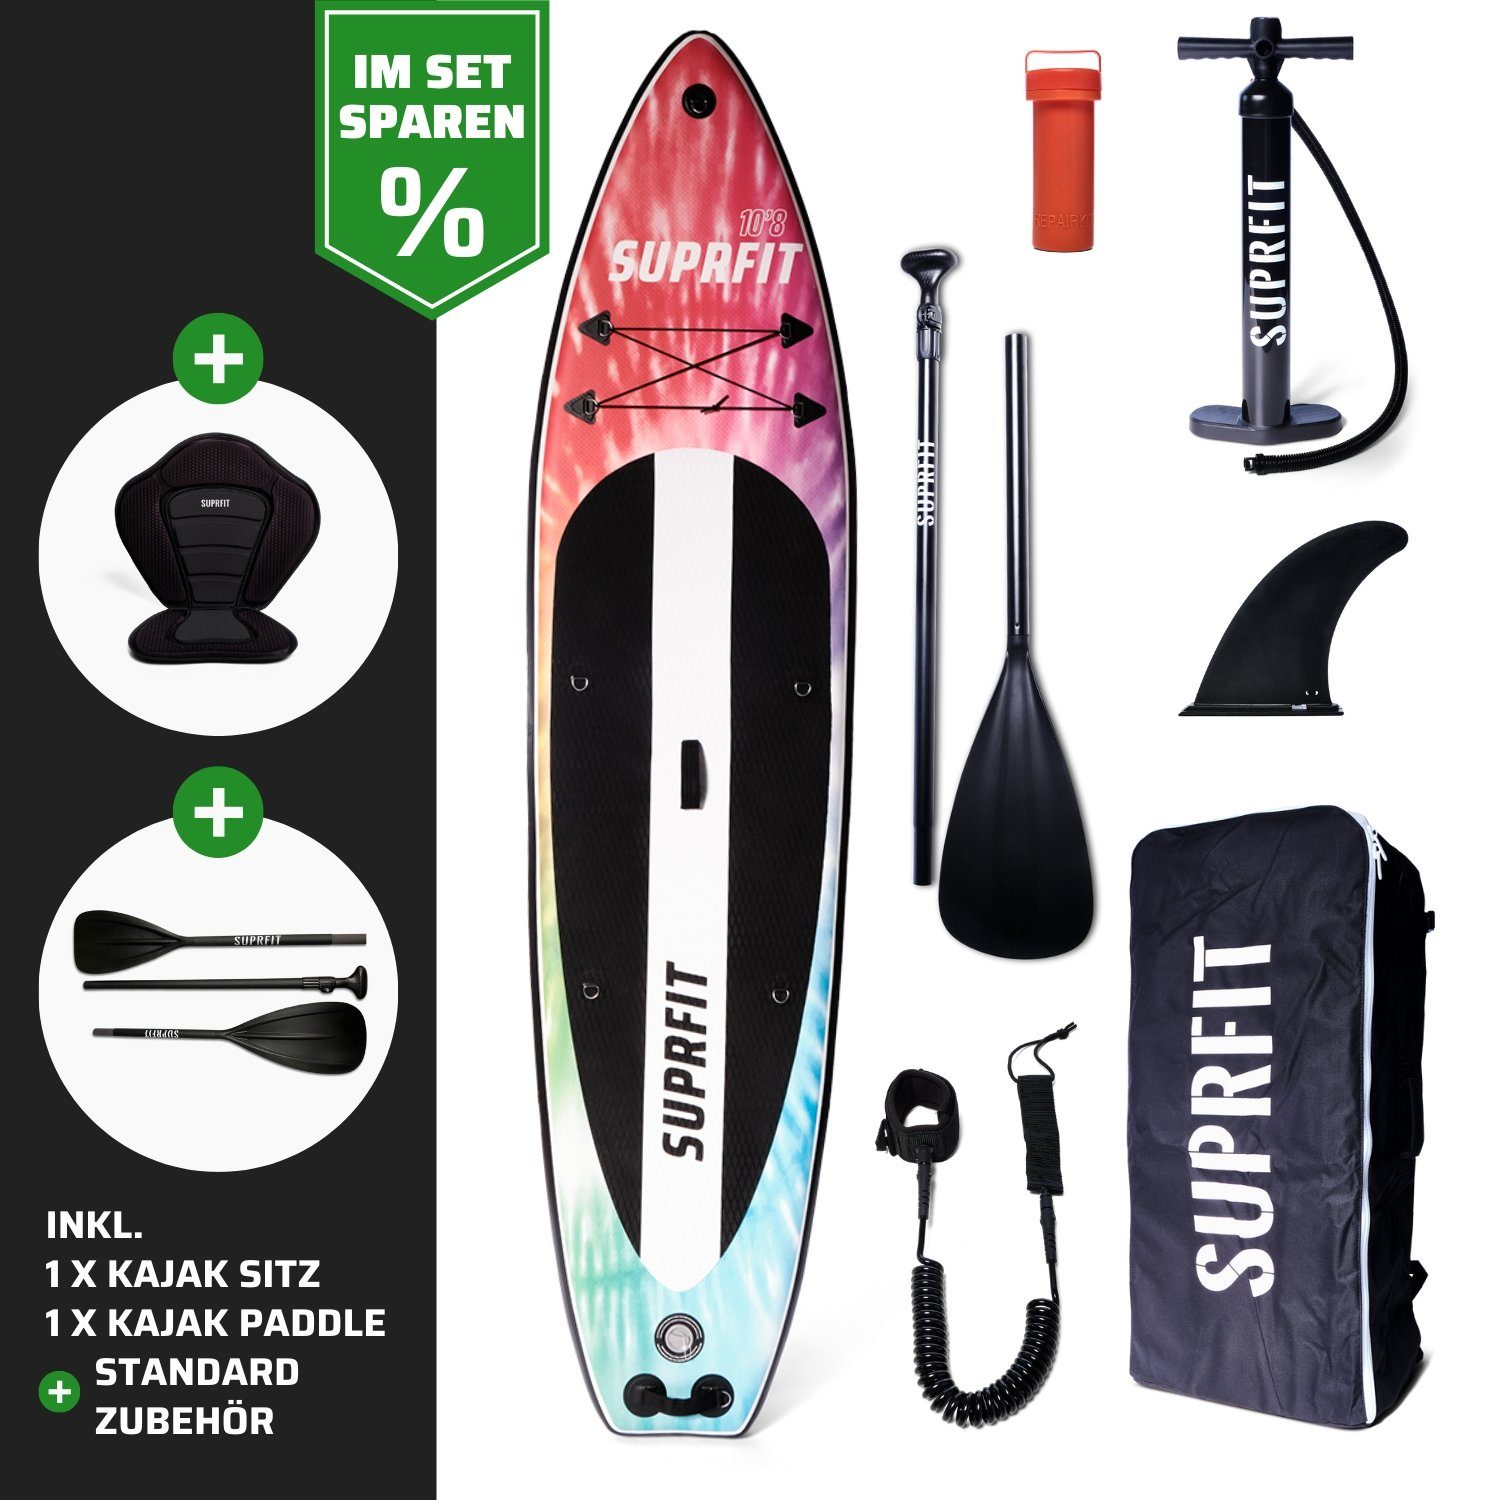 SF SUPRFIT Inflatable SUP-Board SUP Board Set Batik inkl. Sitz und Kajak  Paddle, Touring, Stand Up Paddling Set mit Kayak Sitz und 4-teiliges Paddel